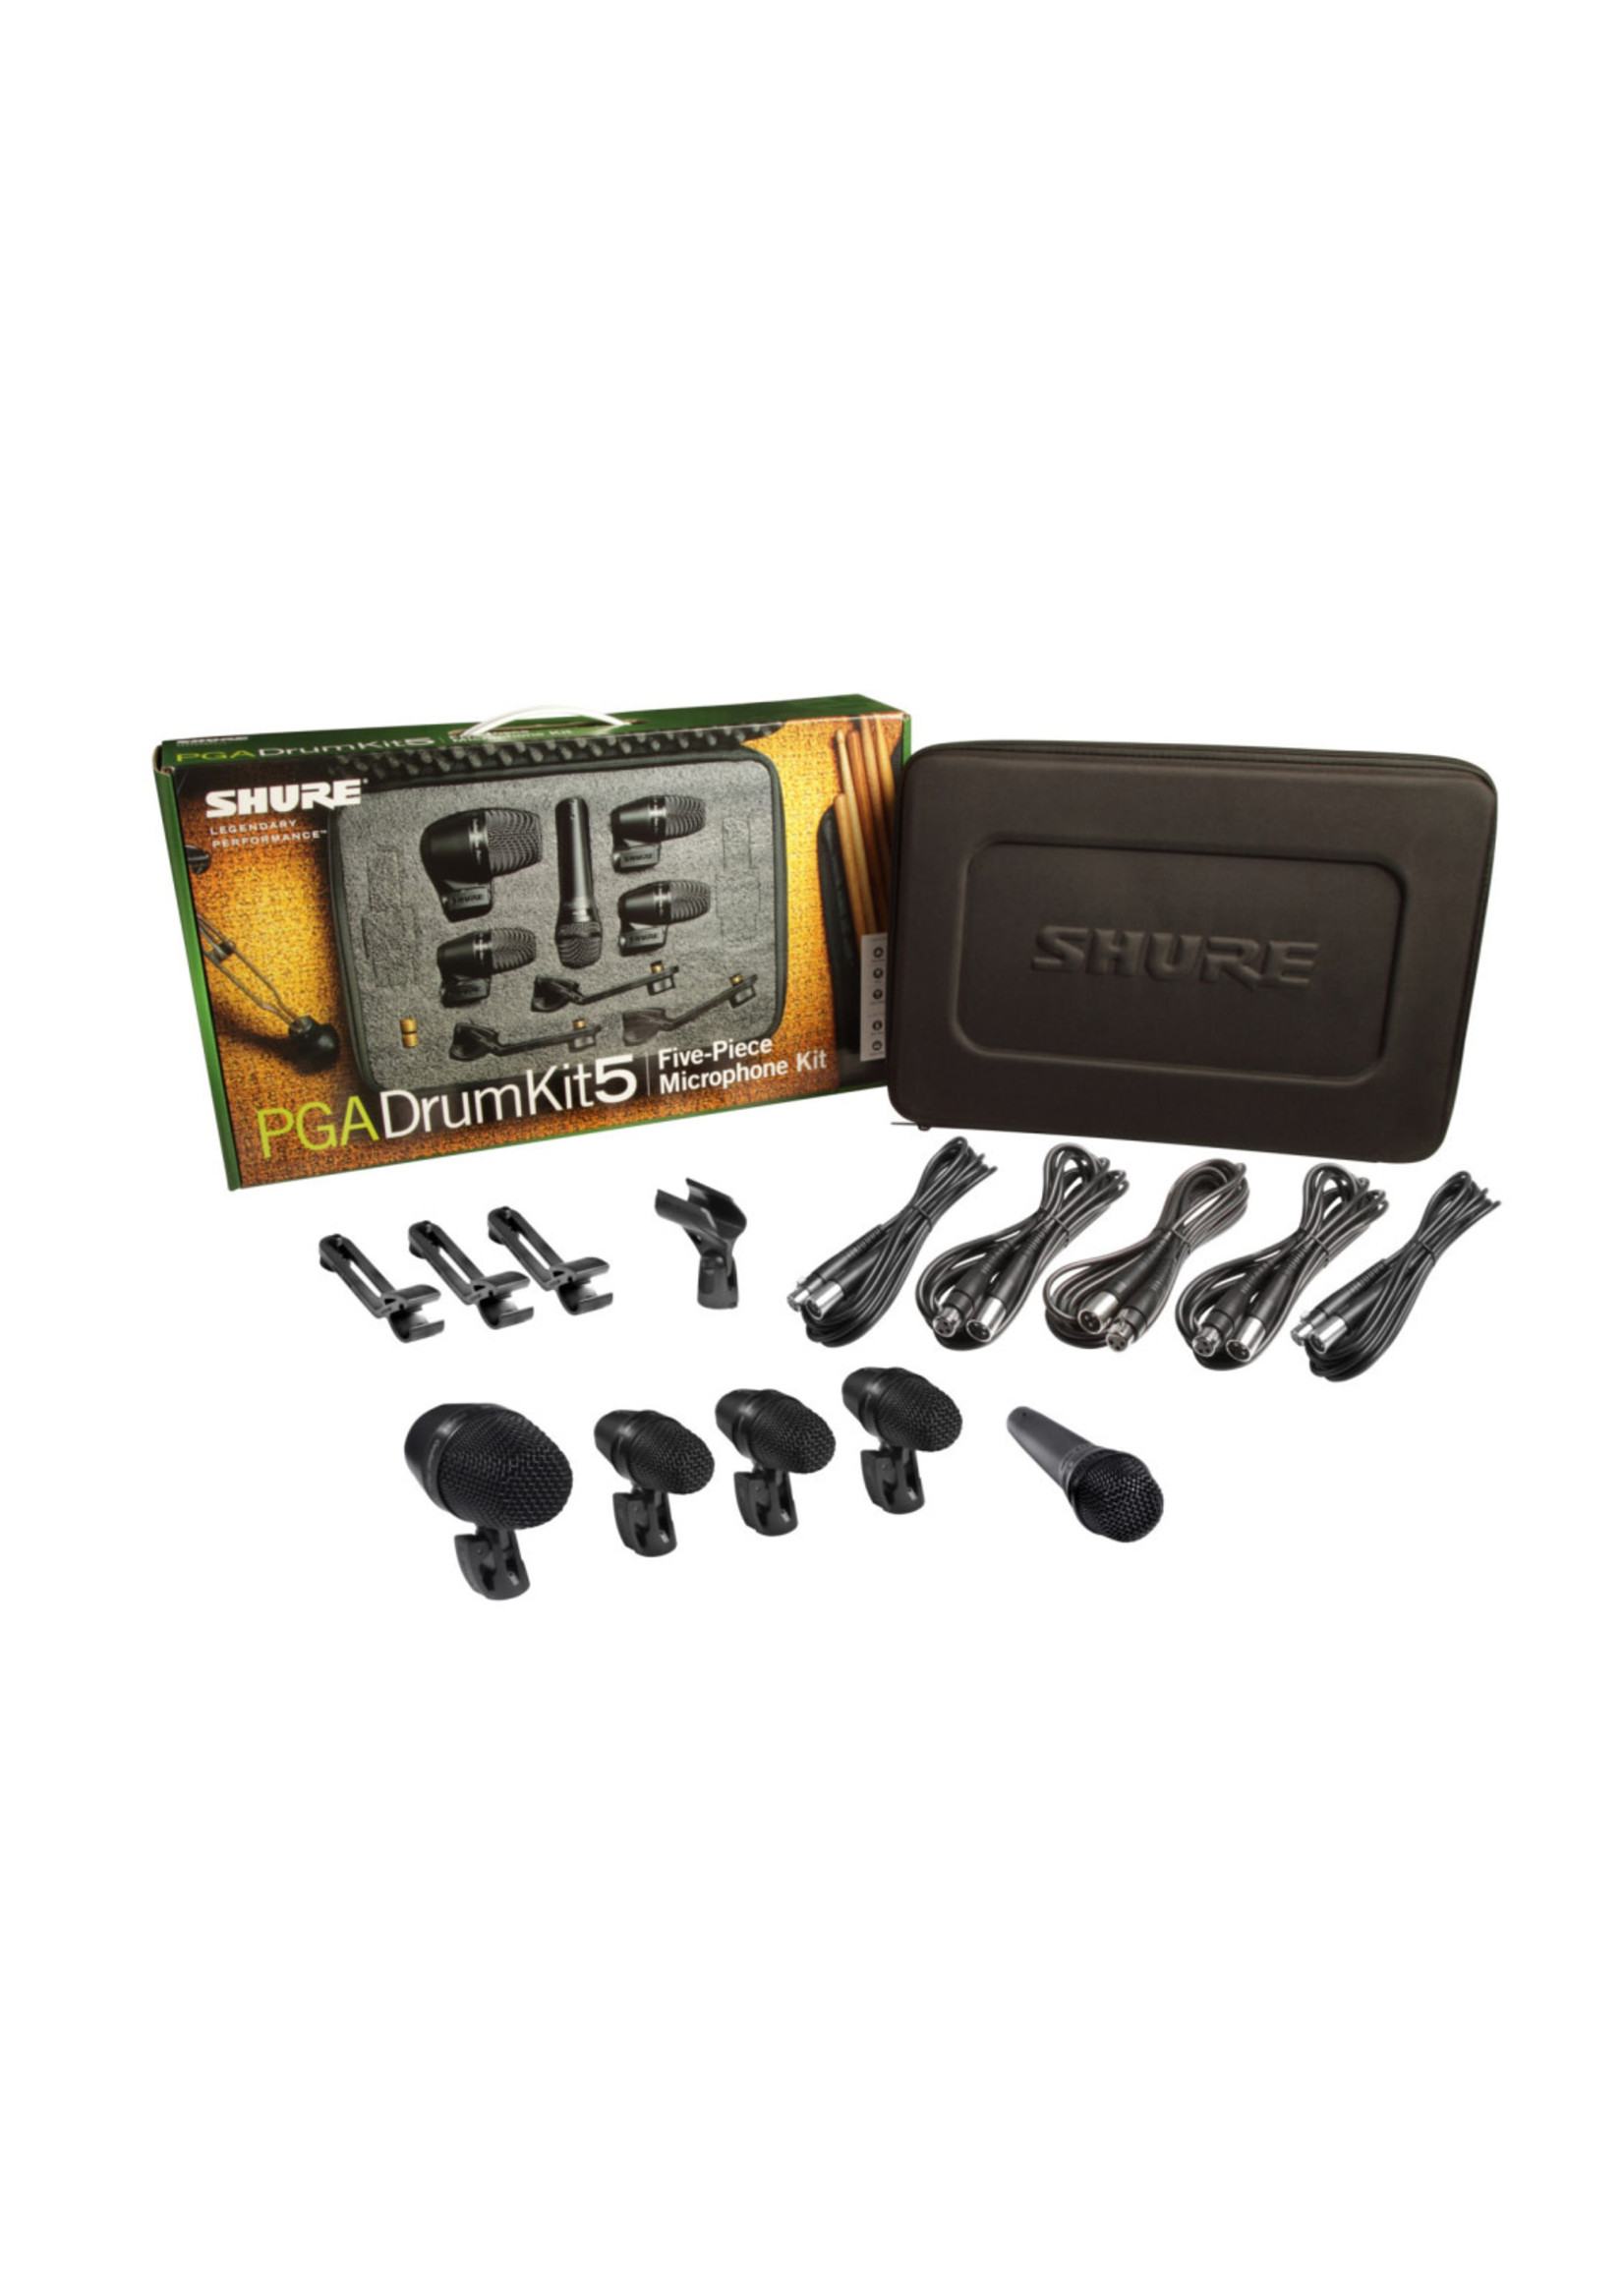 SHURE Shure Drum Kit Microphone Kit PGADRUMKIT5